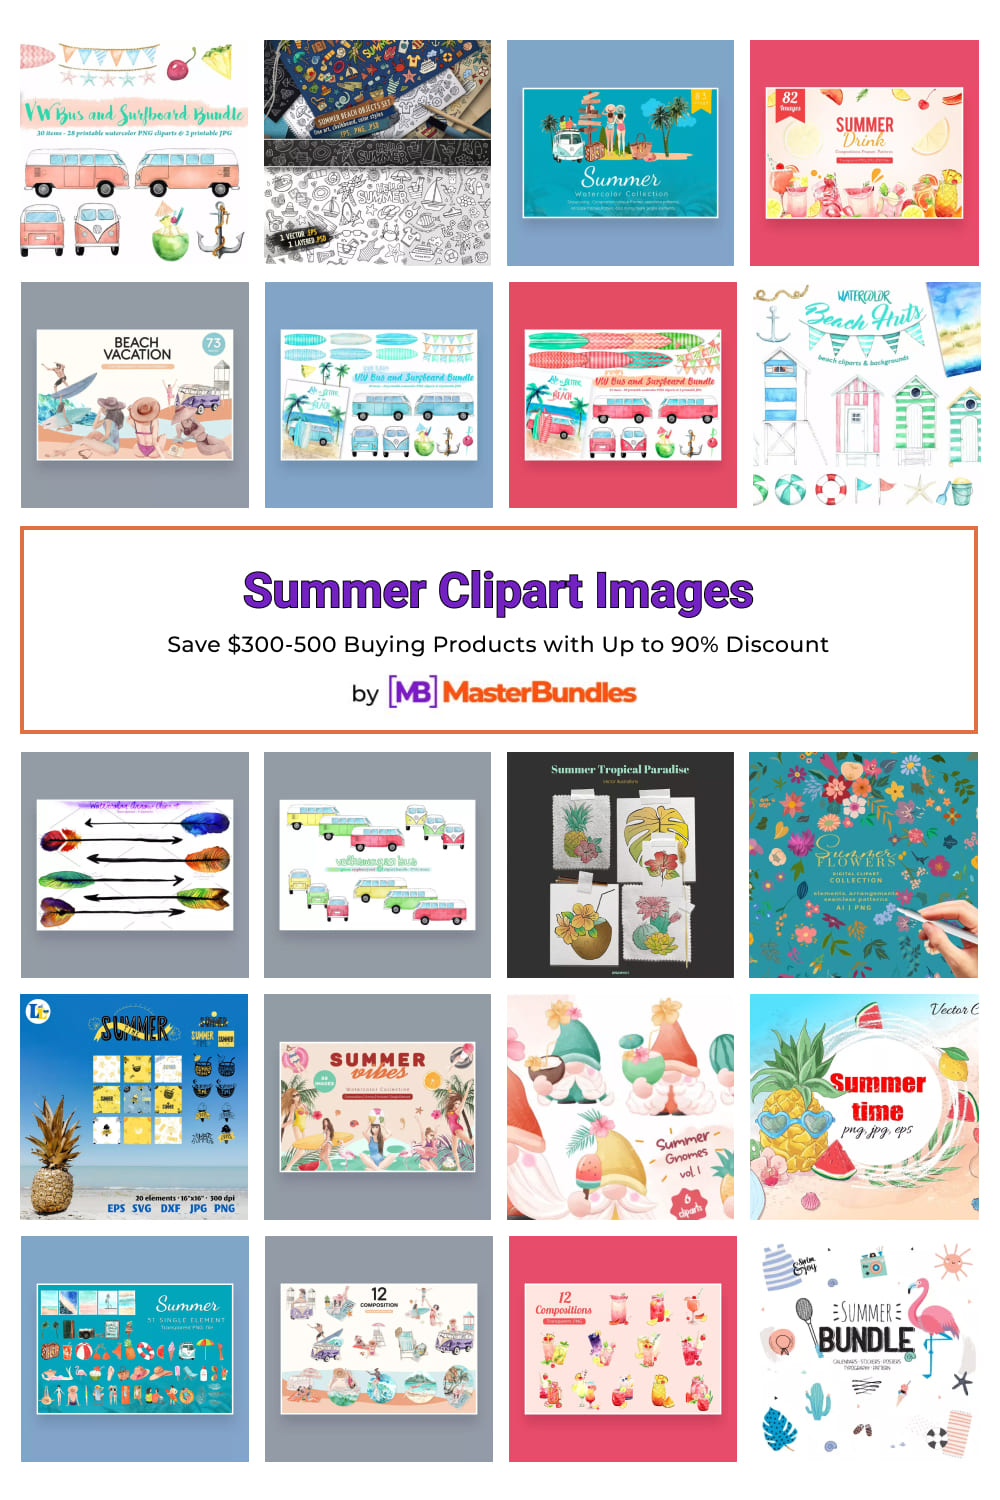 Summer Clipart Images Pinterest.